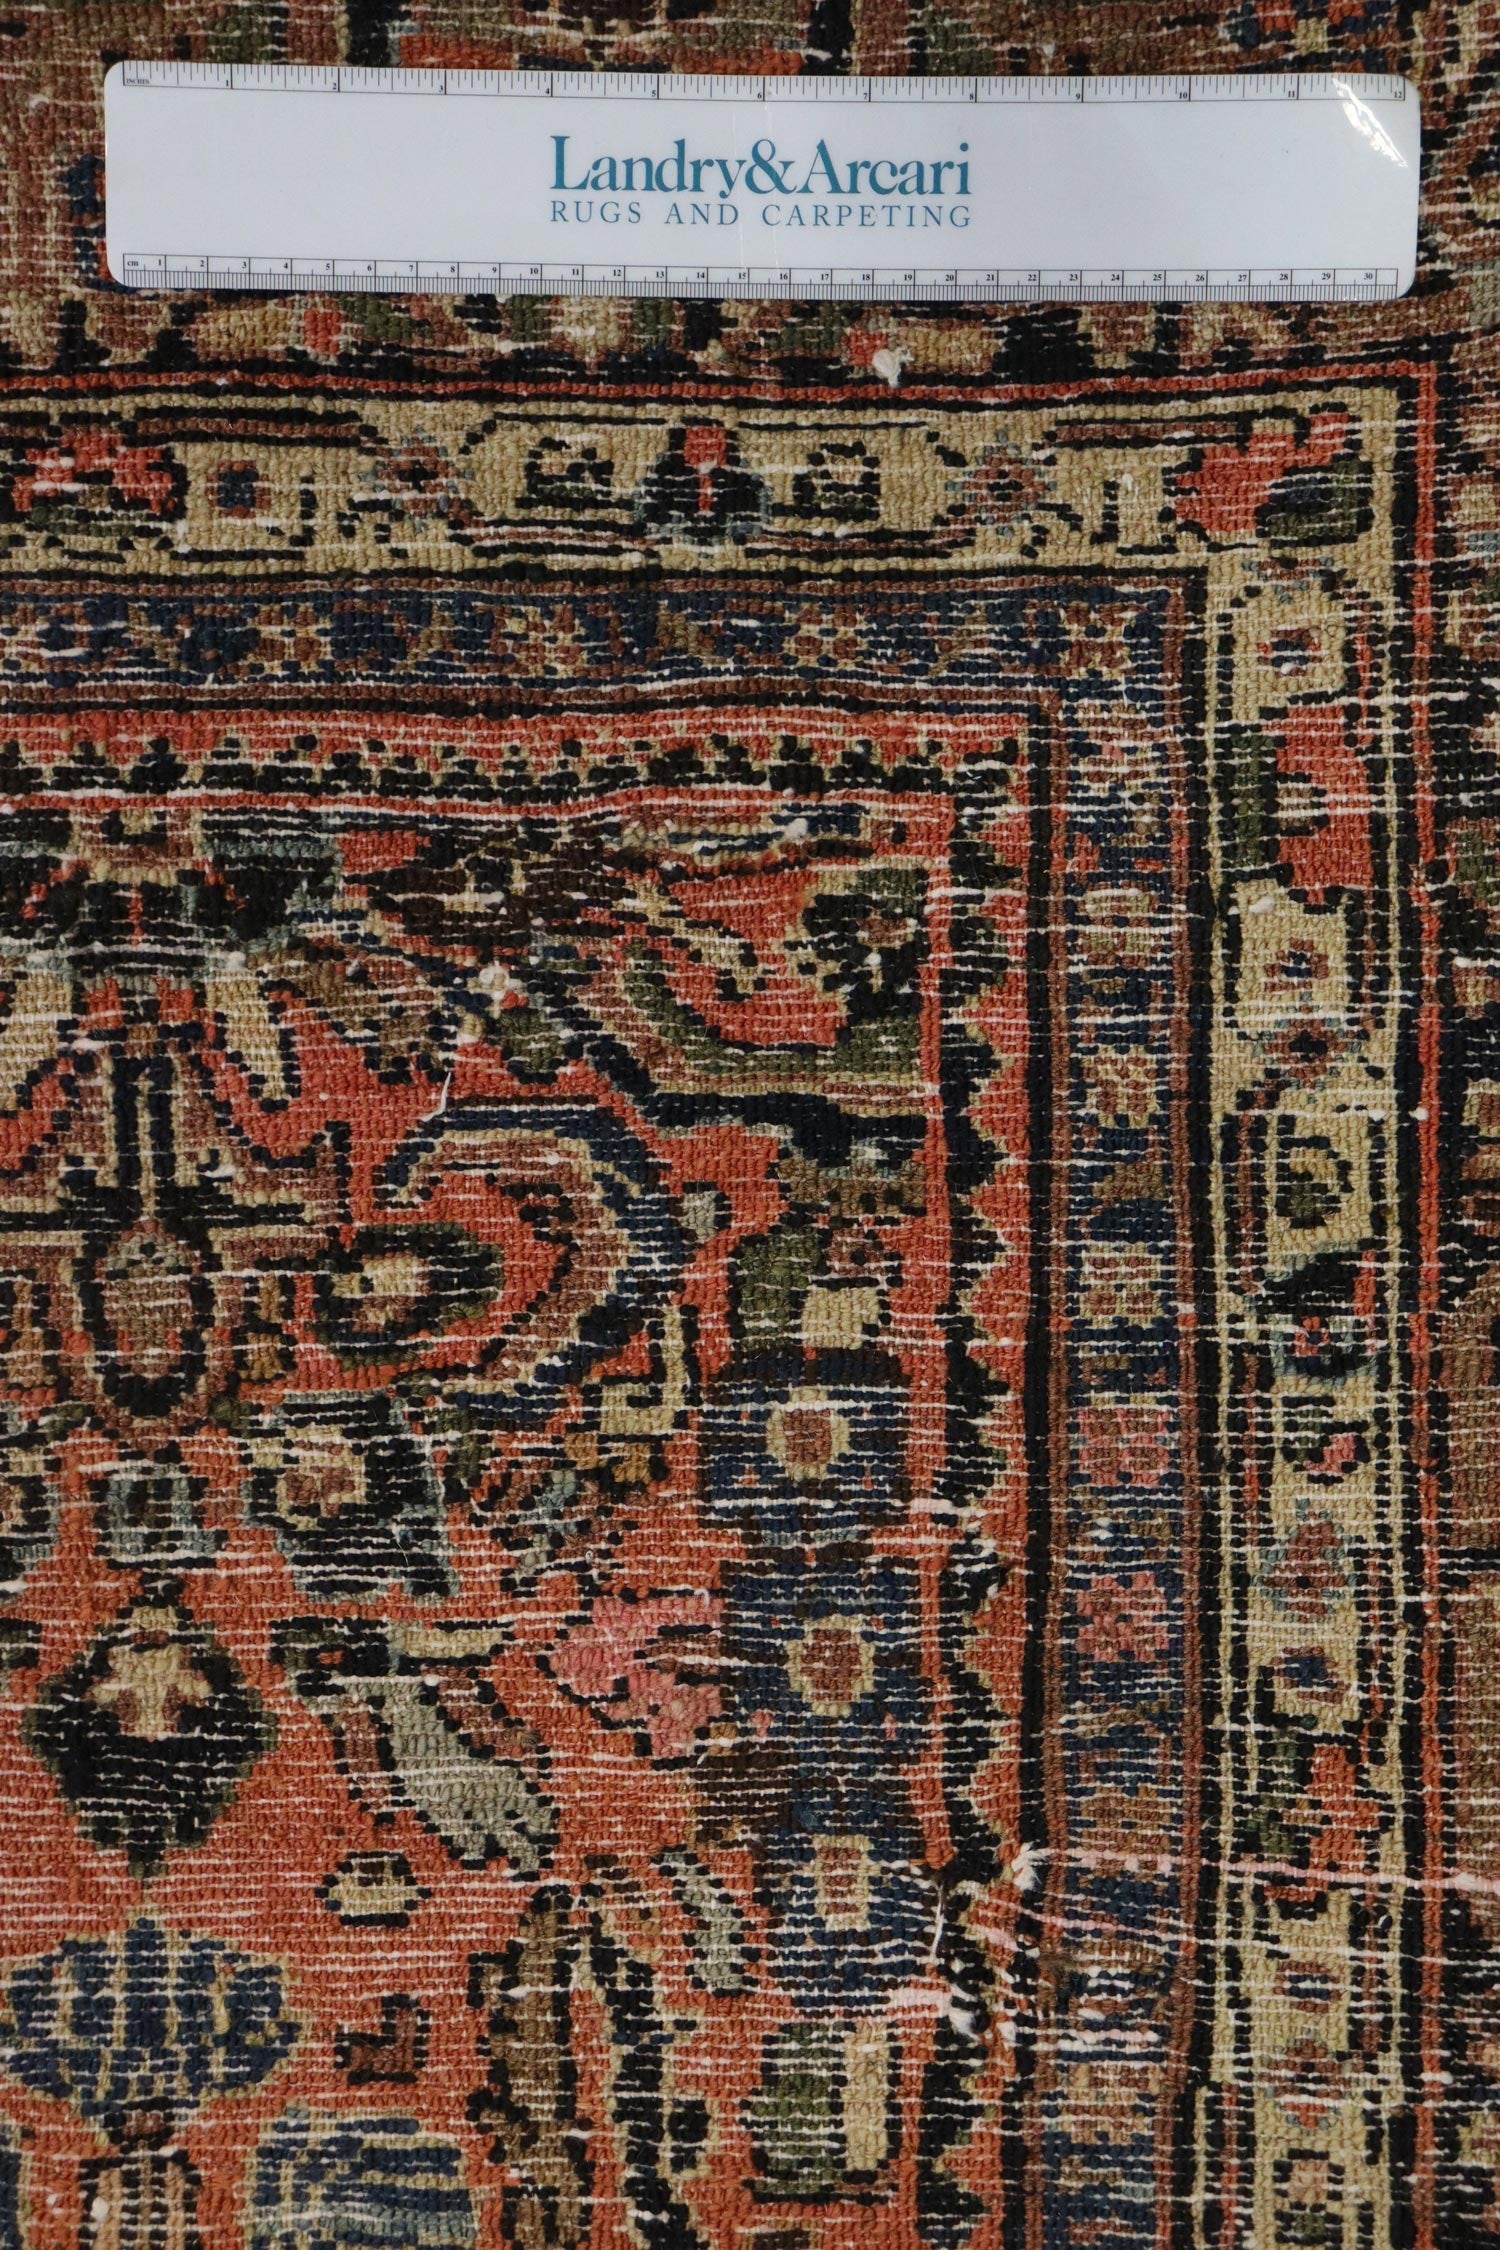 Antique Dargazine Handwoven Traditional Rug, J67817